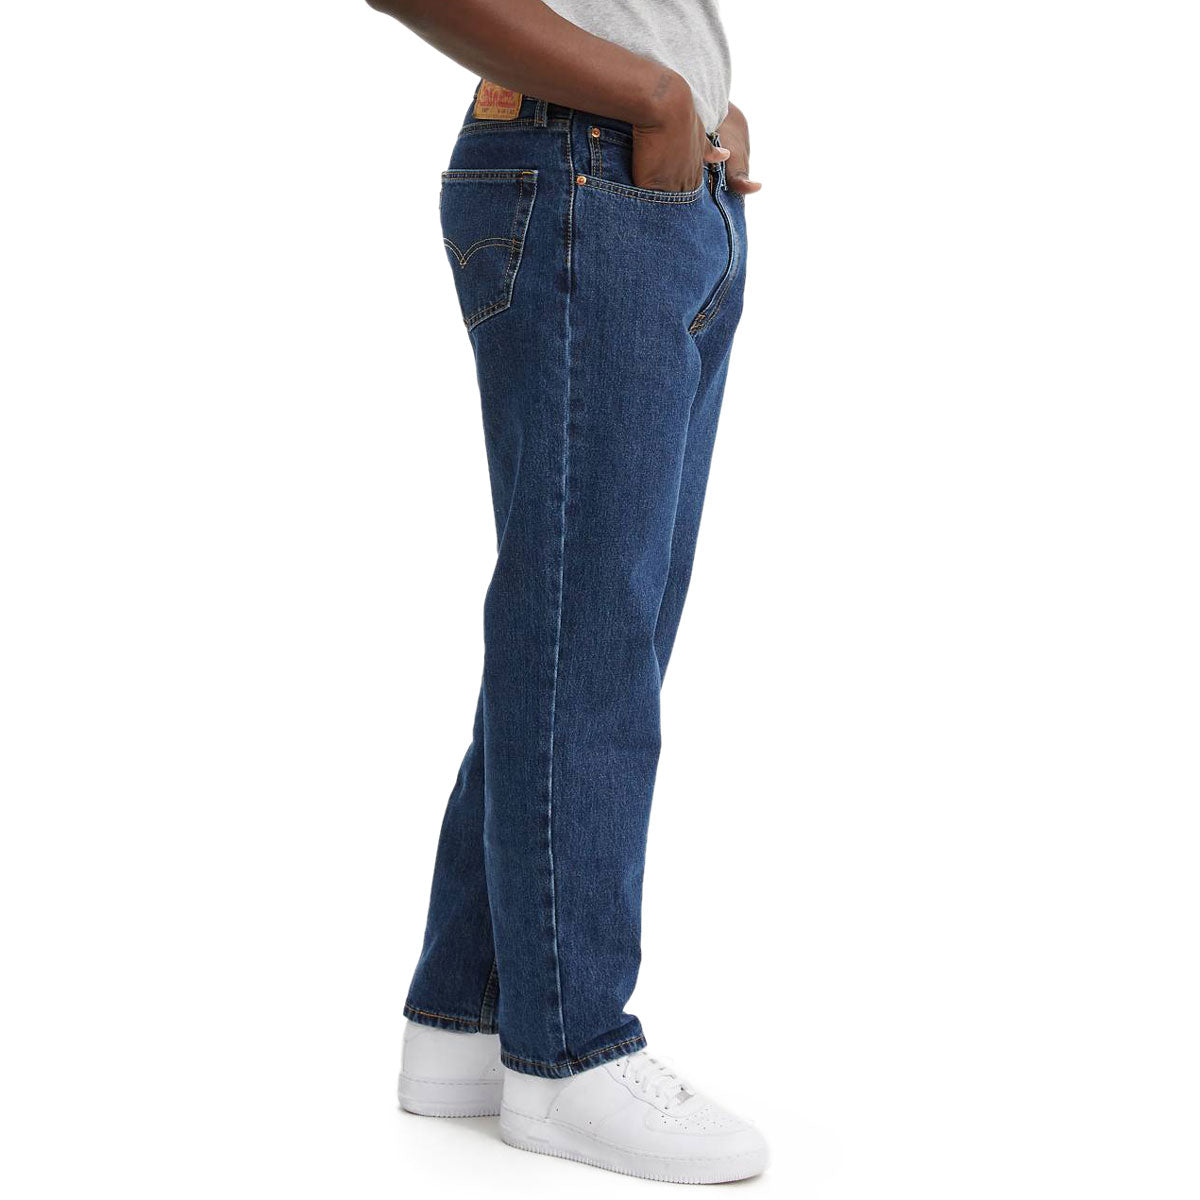 Levi's 550 Relaxed Jeans - Dark Stonewash image 2